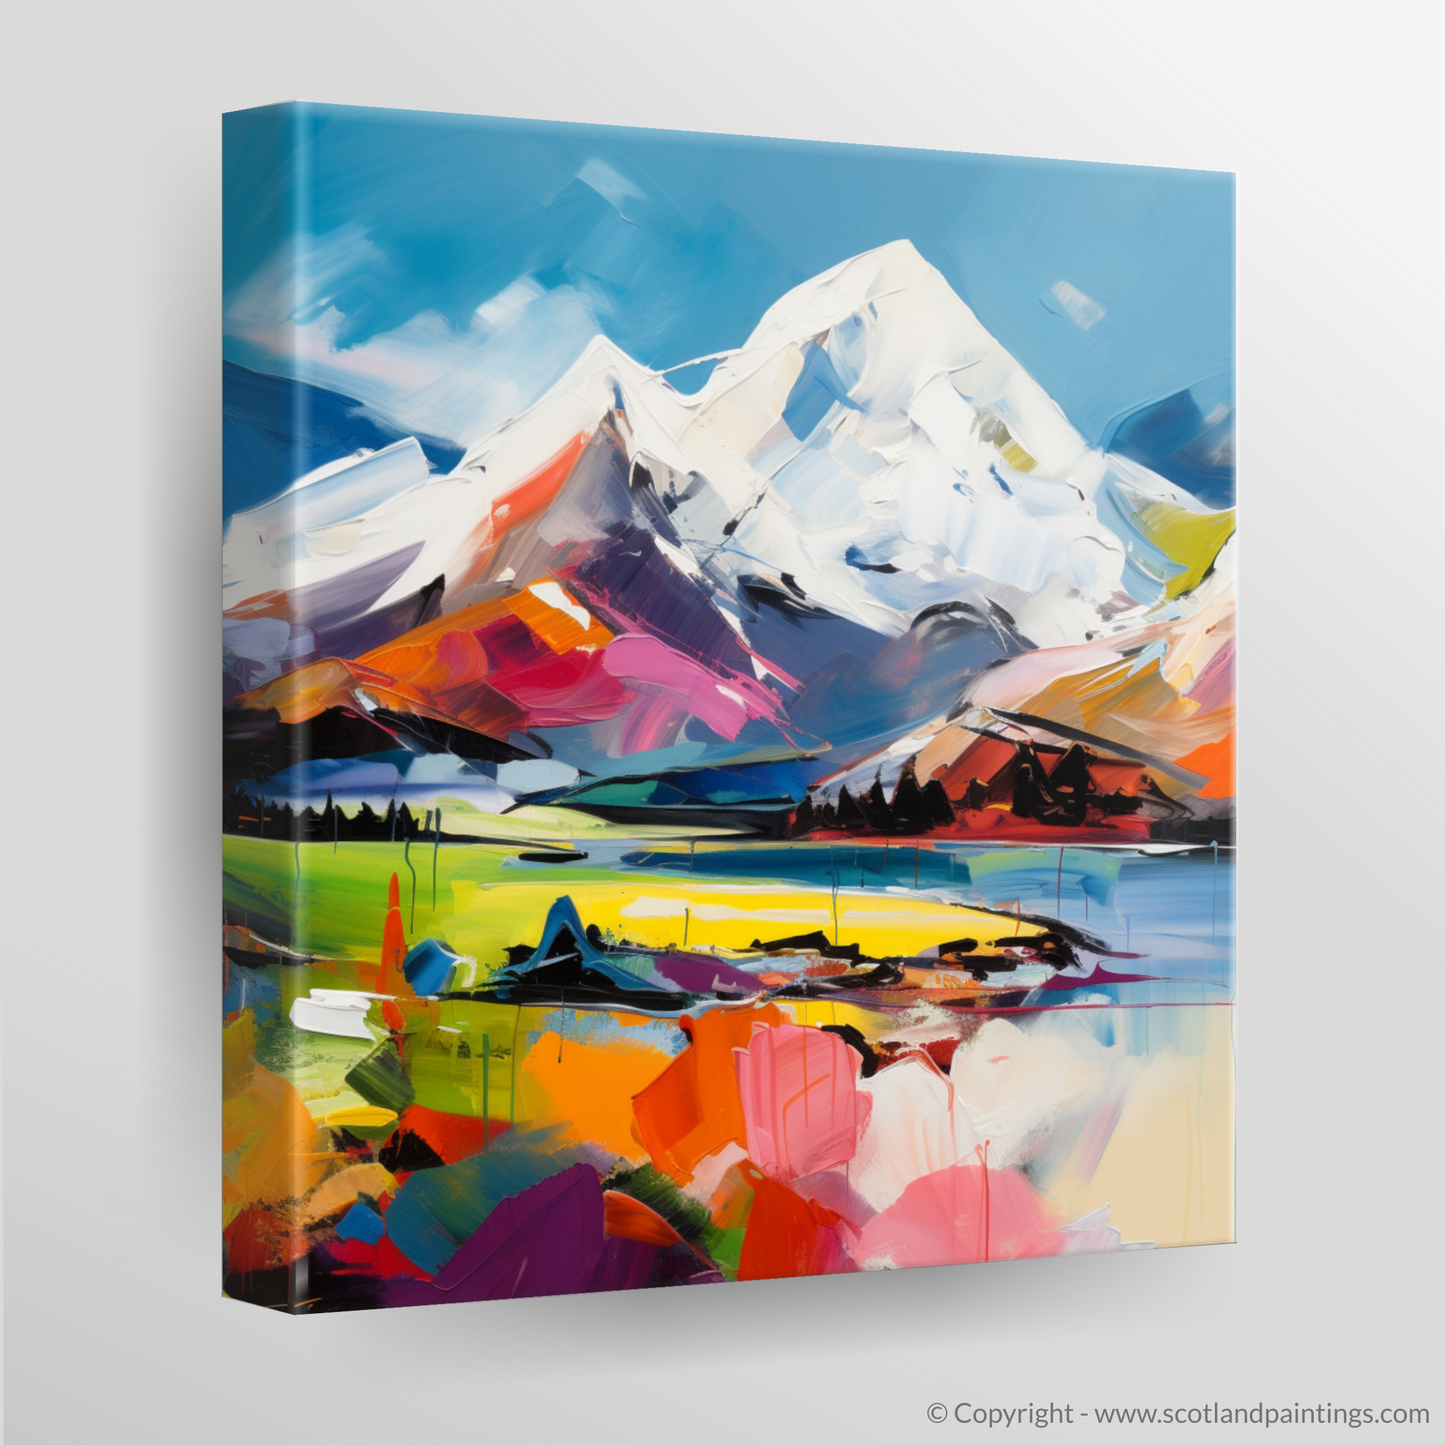 Canvas Print of Snow-capped peaks overlooking Loch Lomond